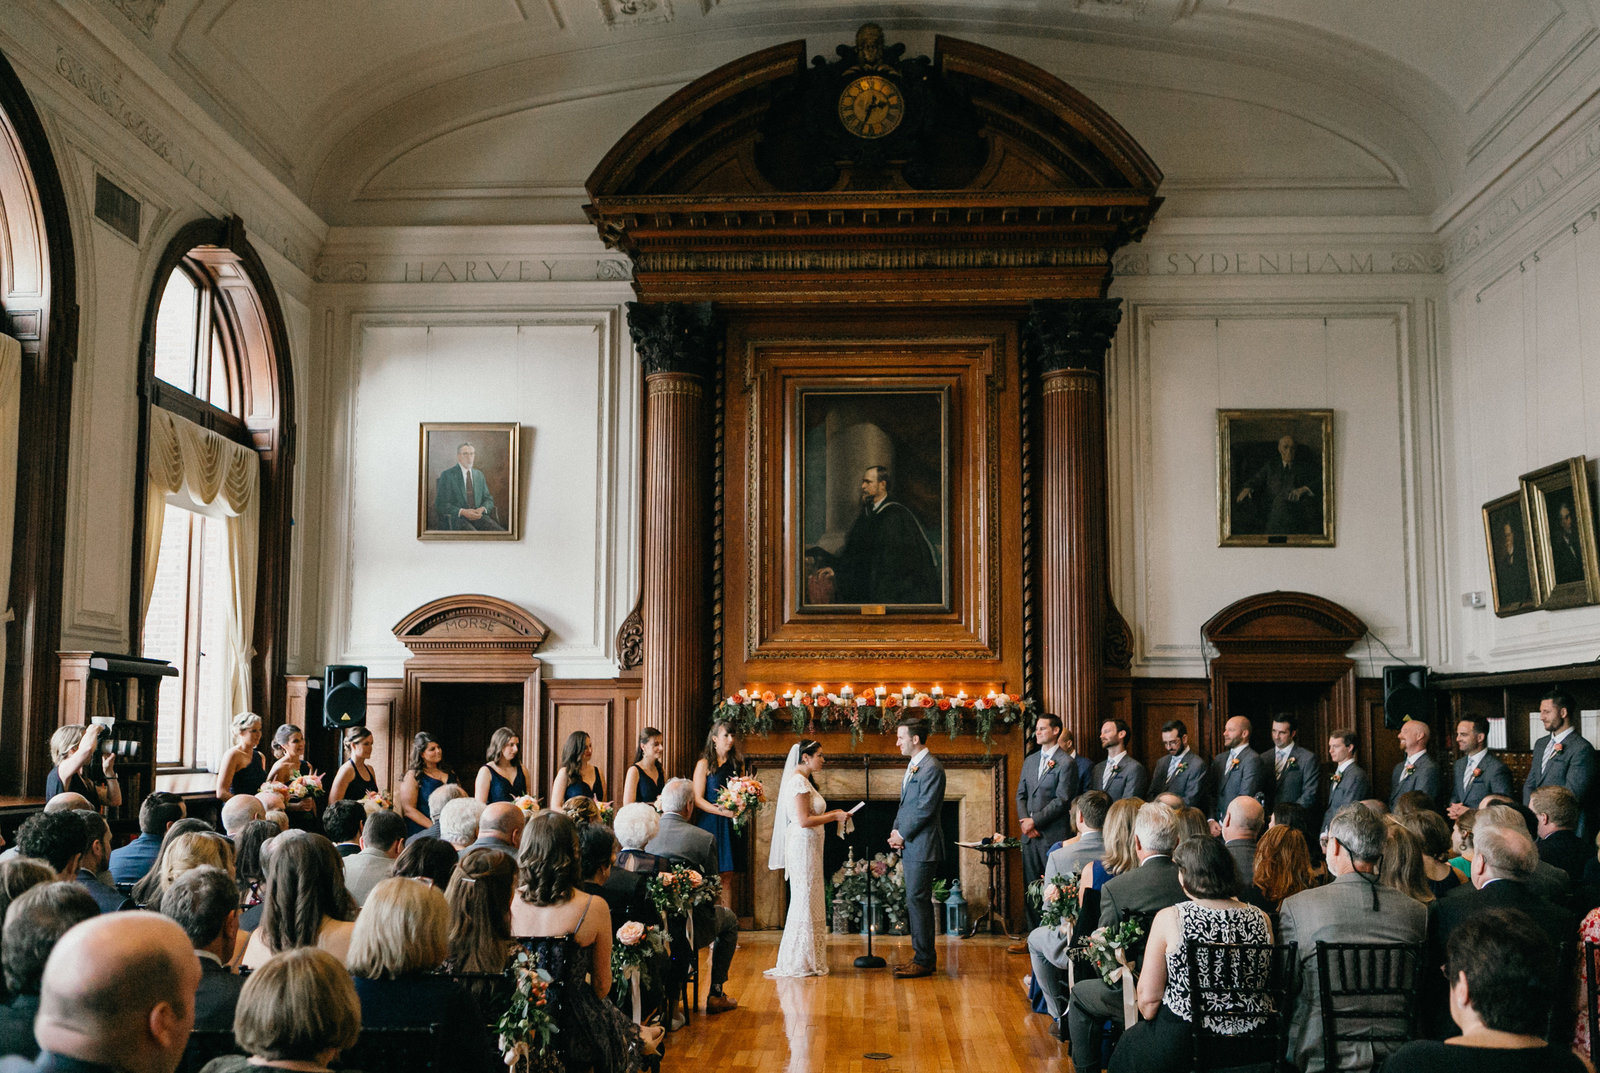 Unique wedding ceremony at the College of Physcians in Rittenhouse, Philadelphia.